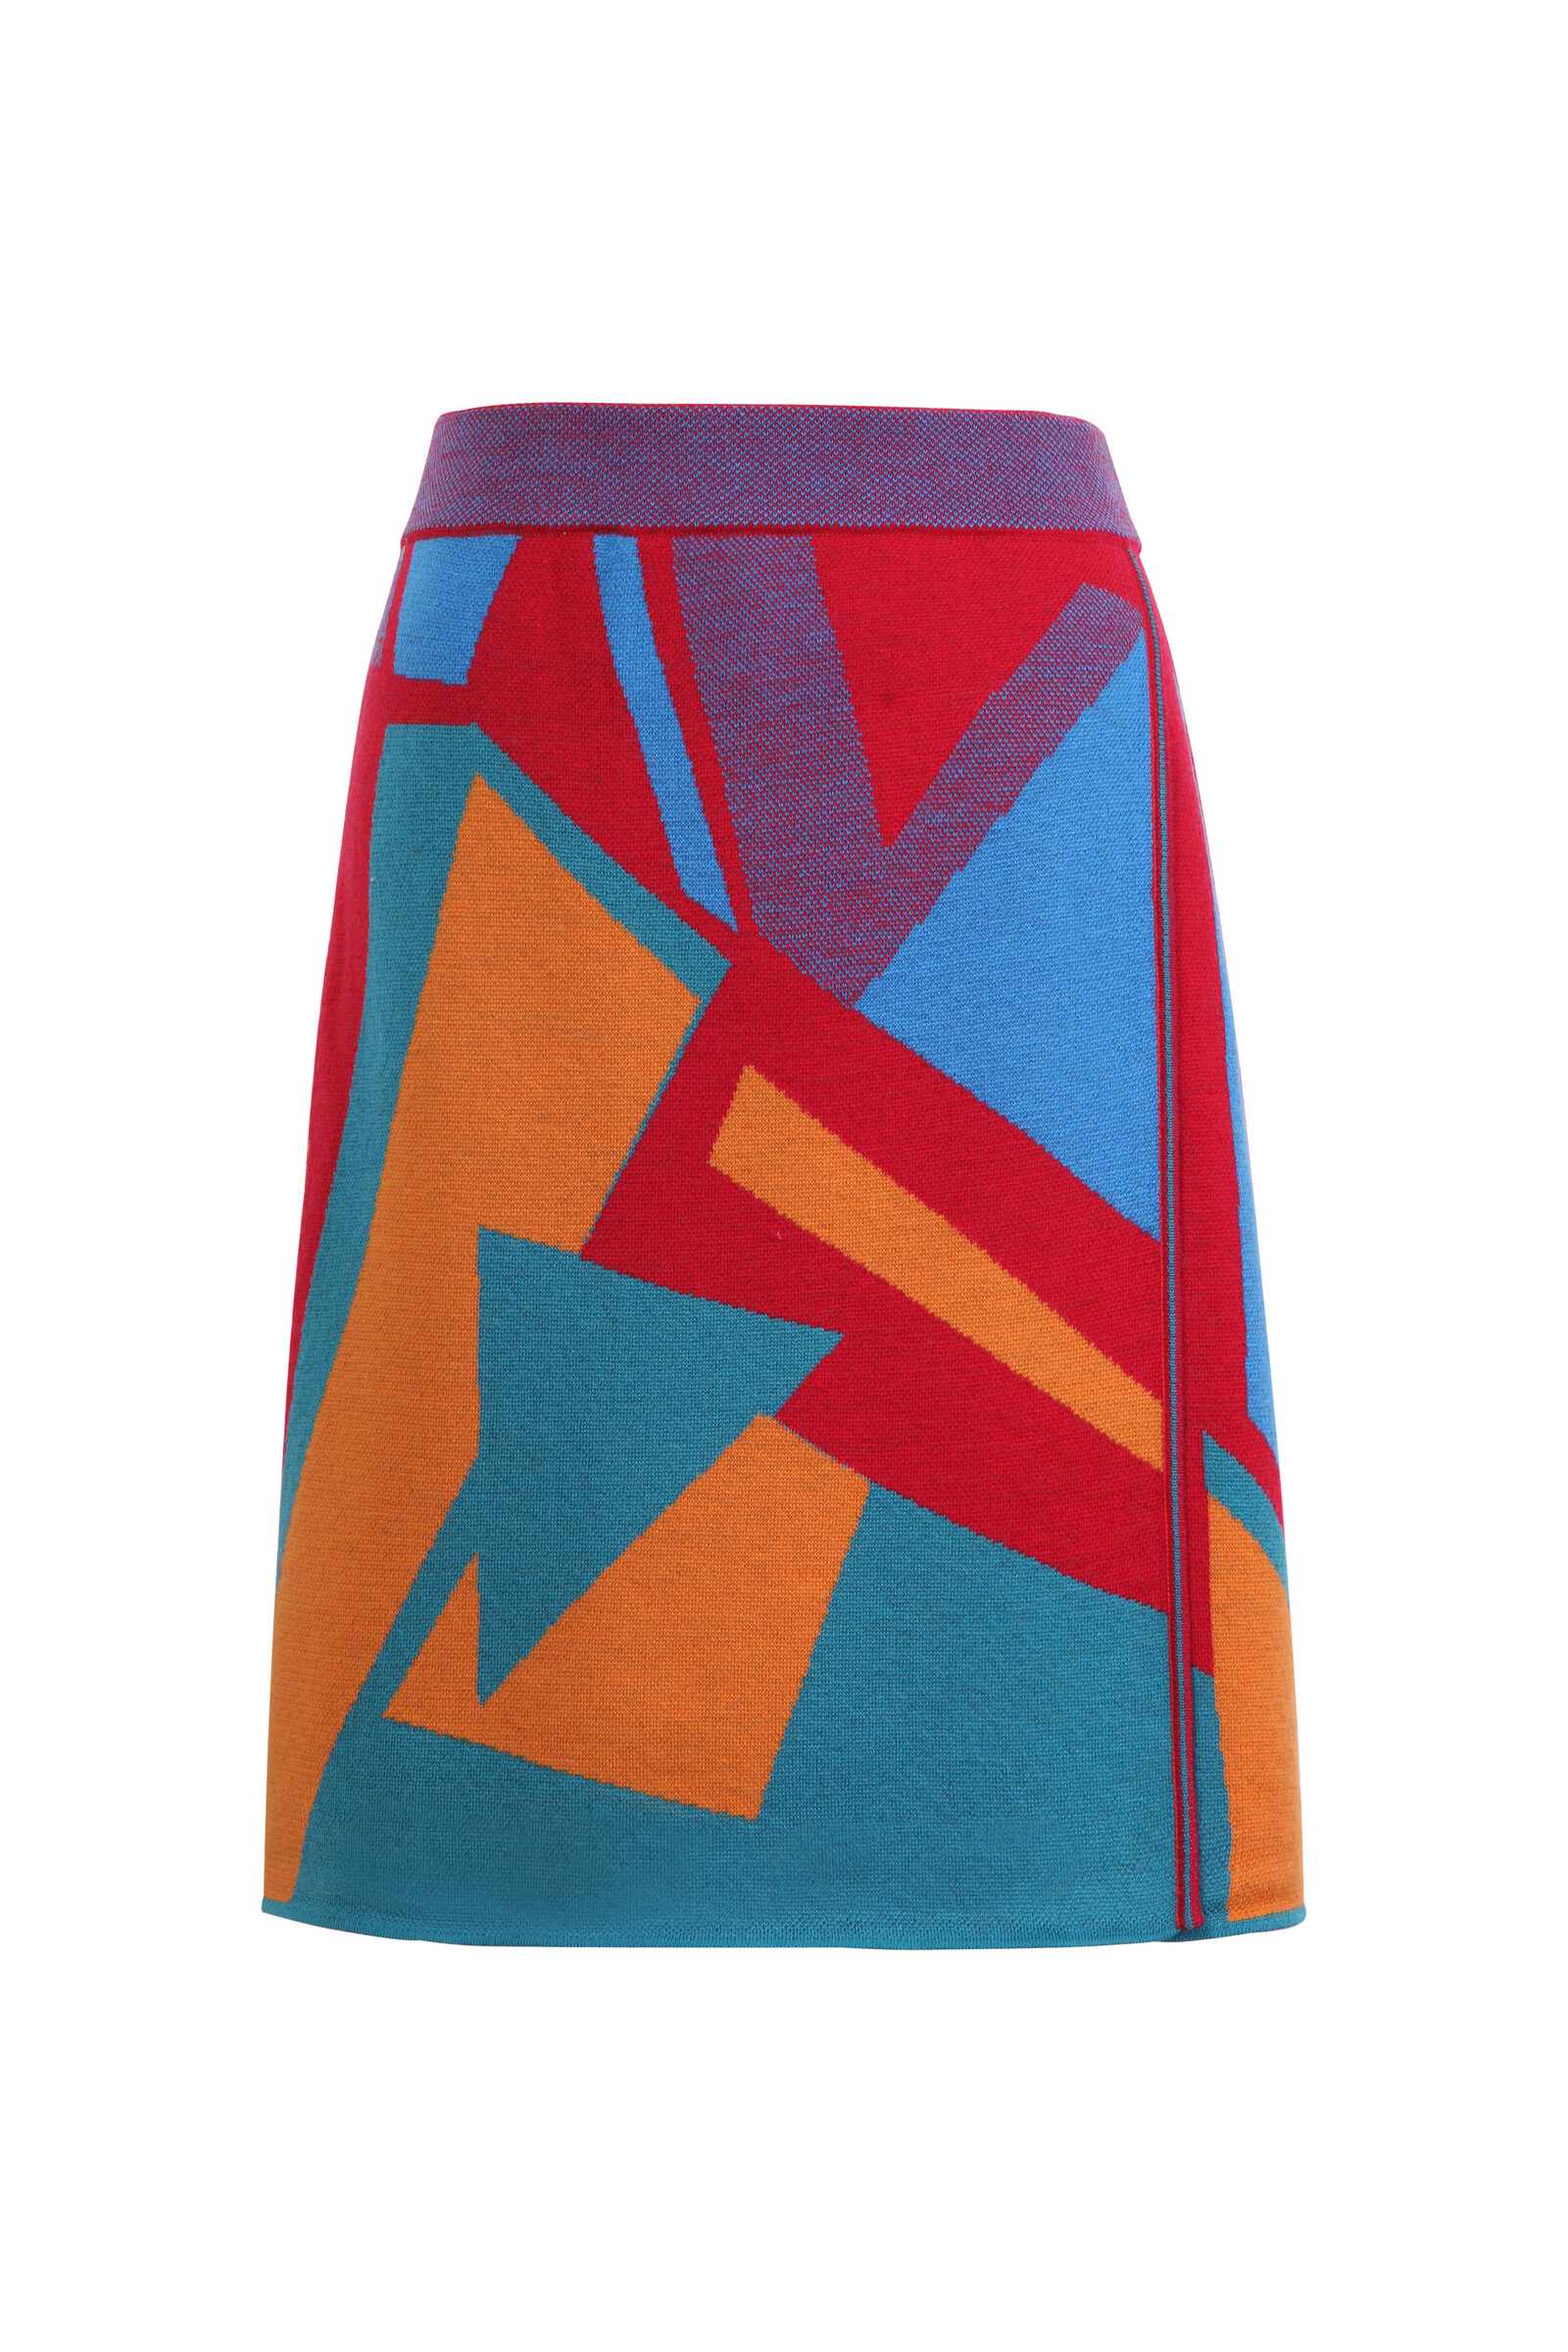 IVKO  Woman IVKO - Skirt Abstract Pattern Cherry